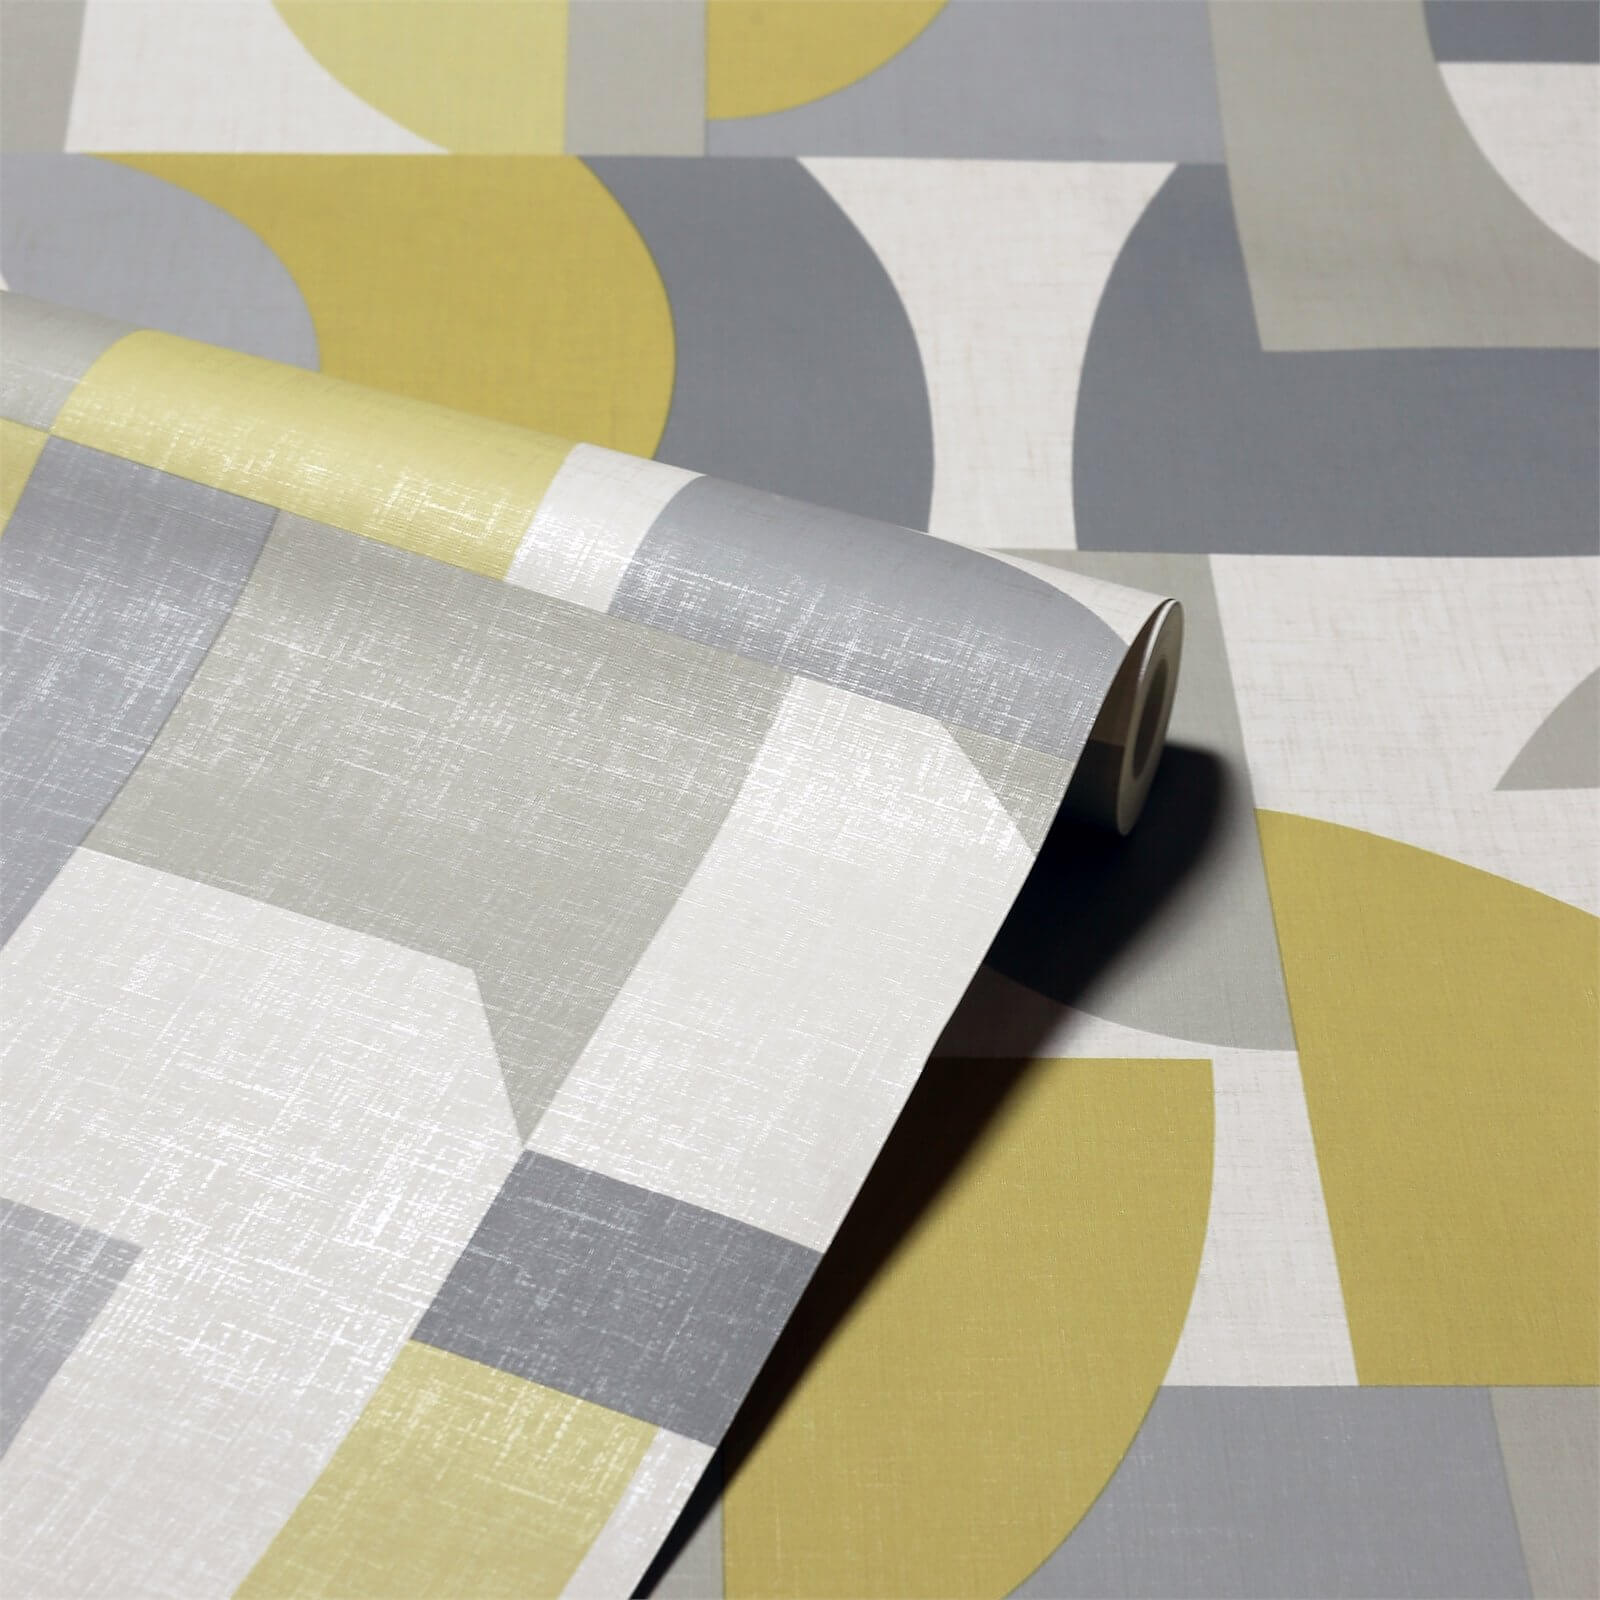 Arthouse Modern Geometric Textured Ochre and Grey Wallpaper